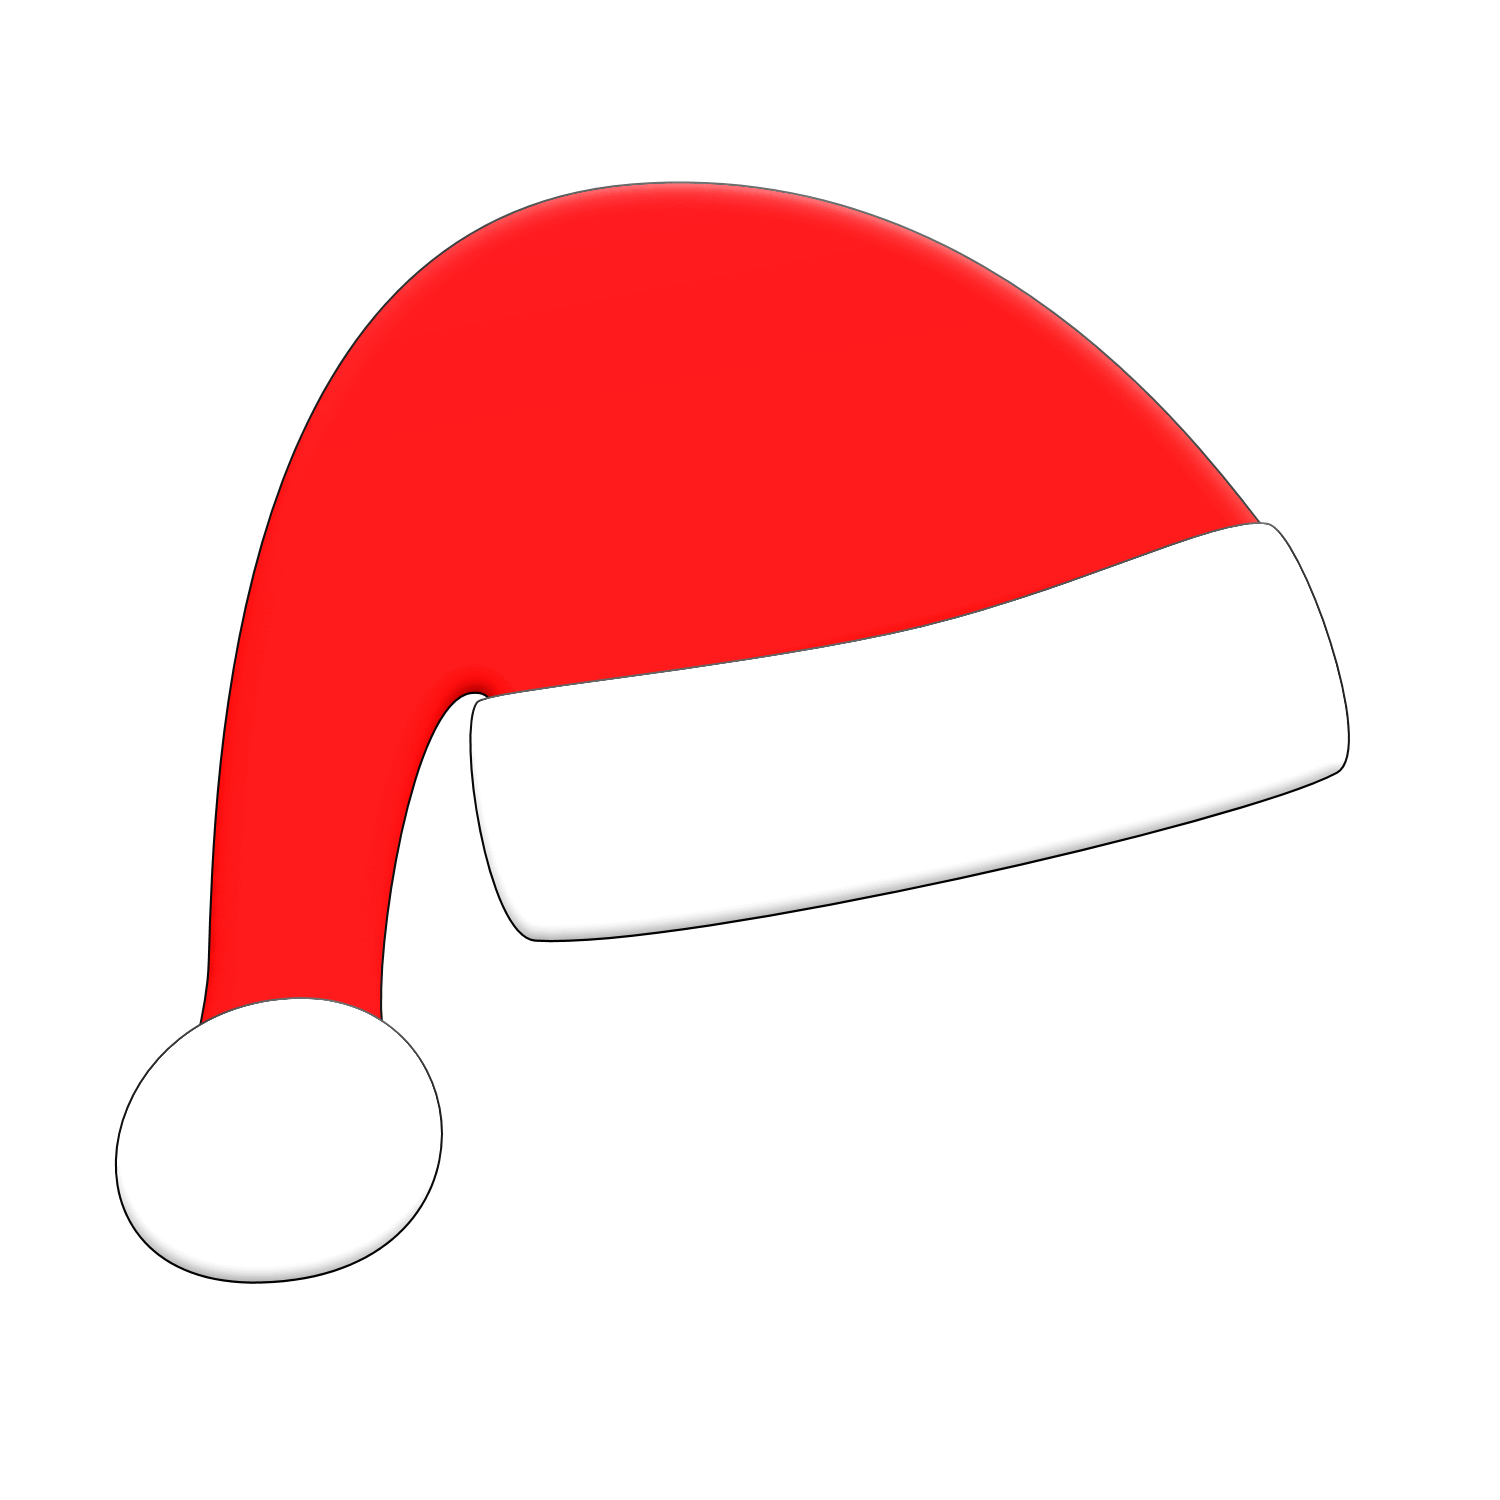 Santa Claus hat PNG image free Download 